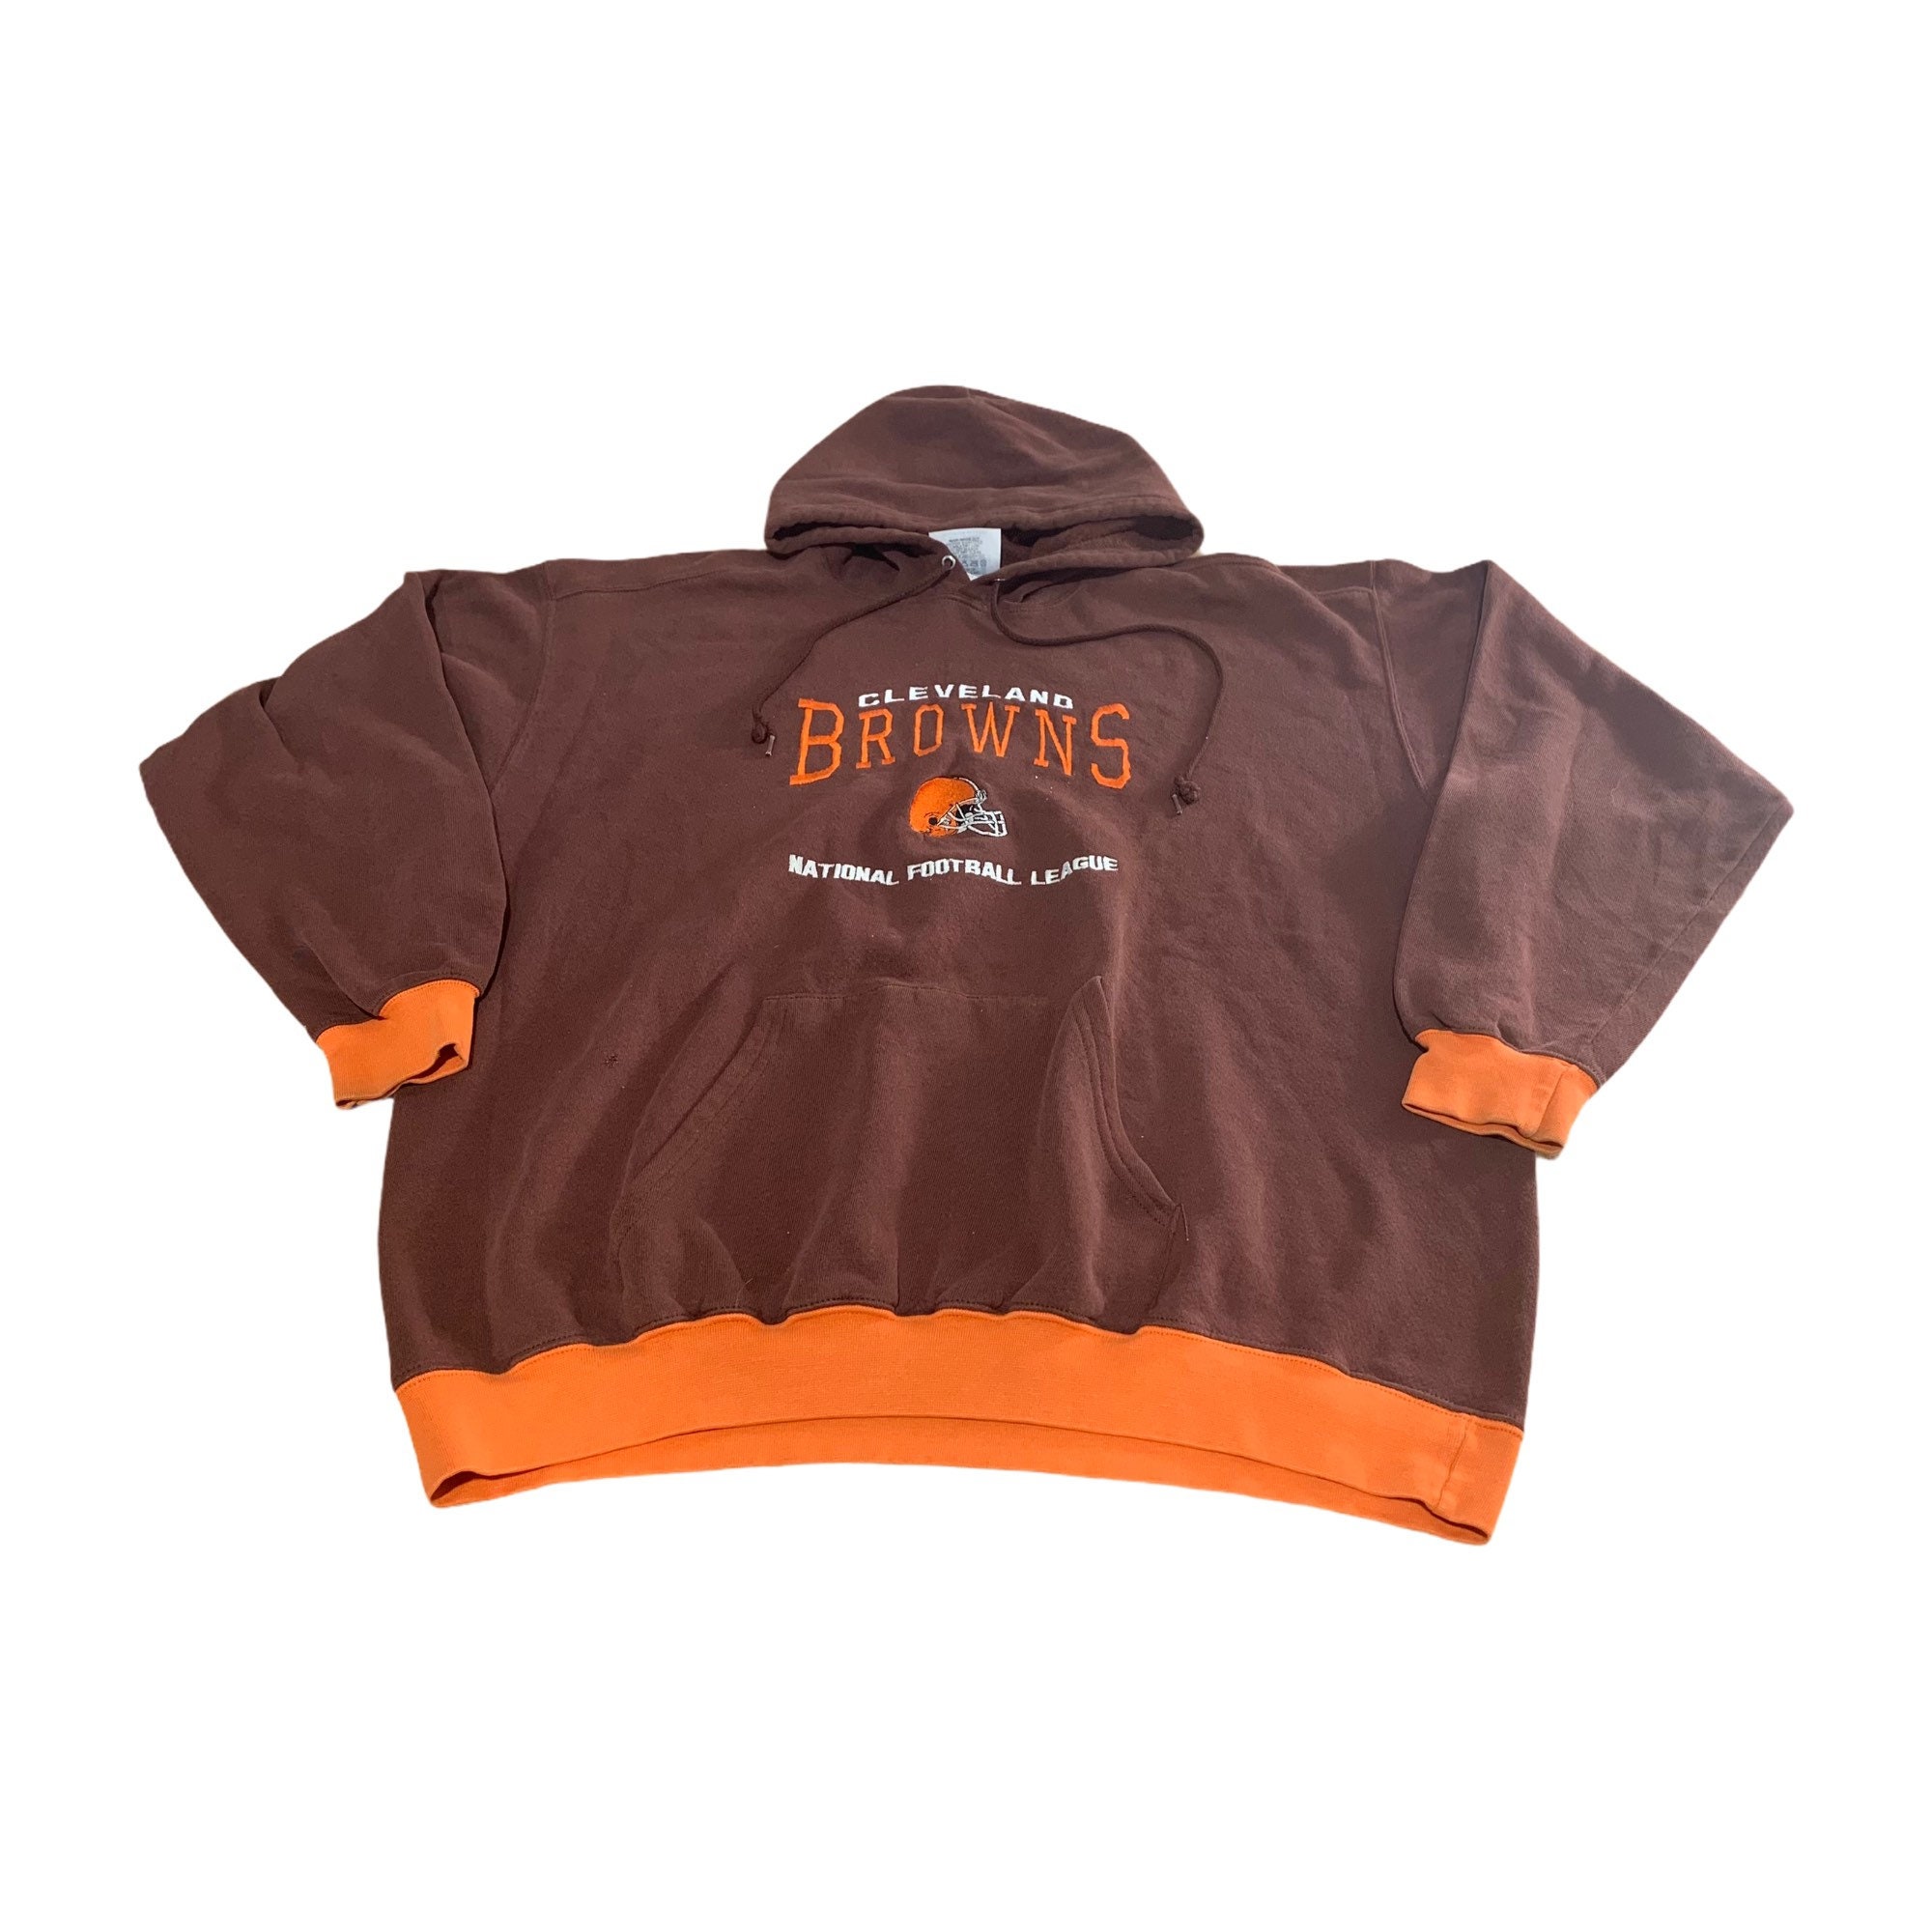 Vintage 90s Cleveland Browns Graphic Sweatshirt / Vintage NFL | Etsy